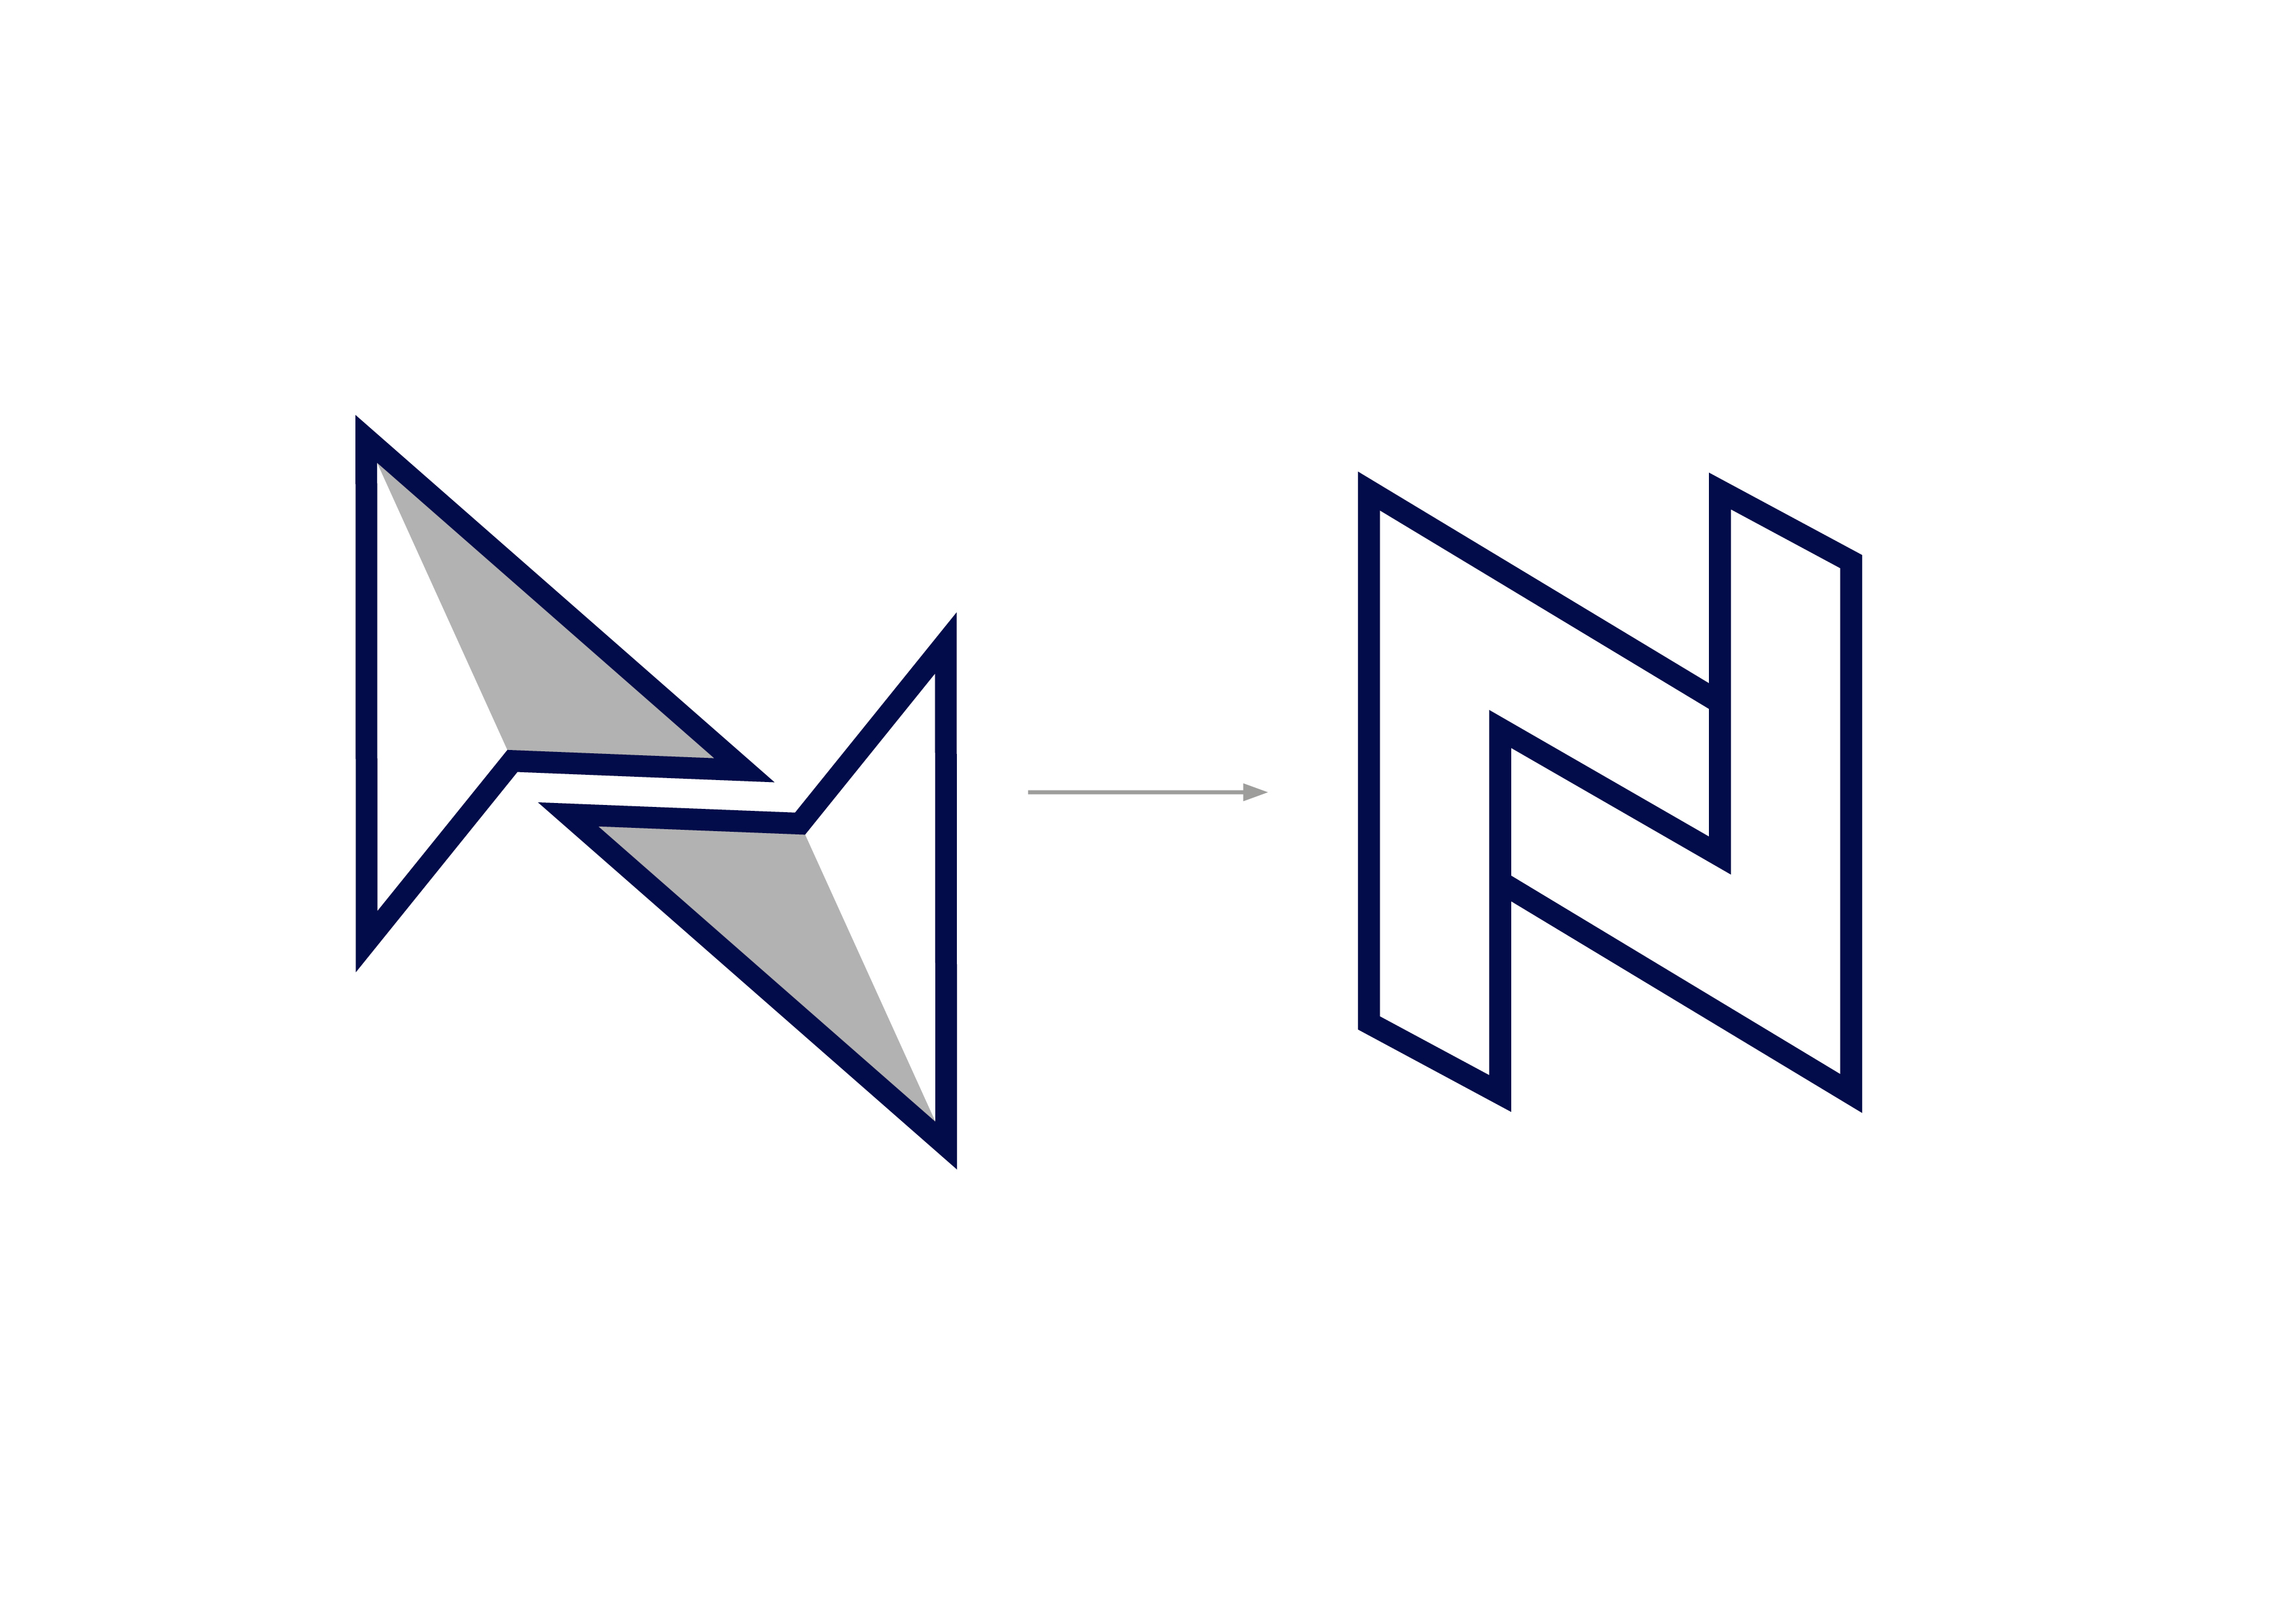 Njord – Logo Design